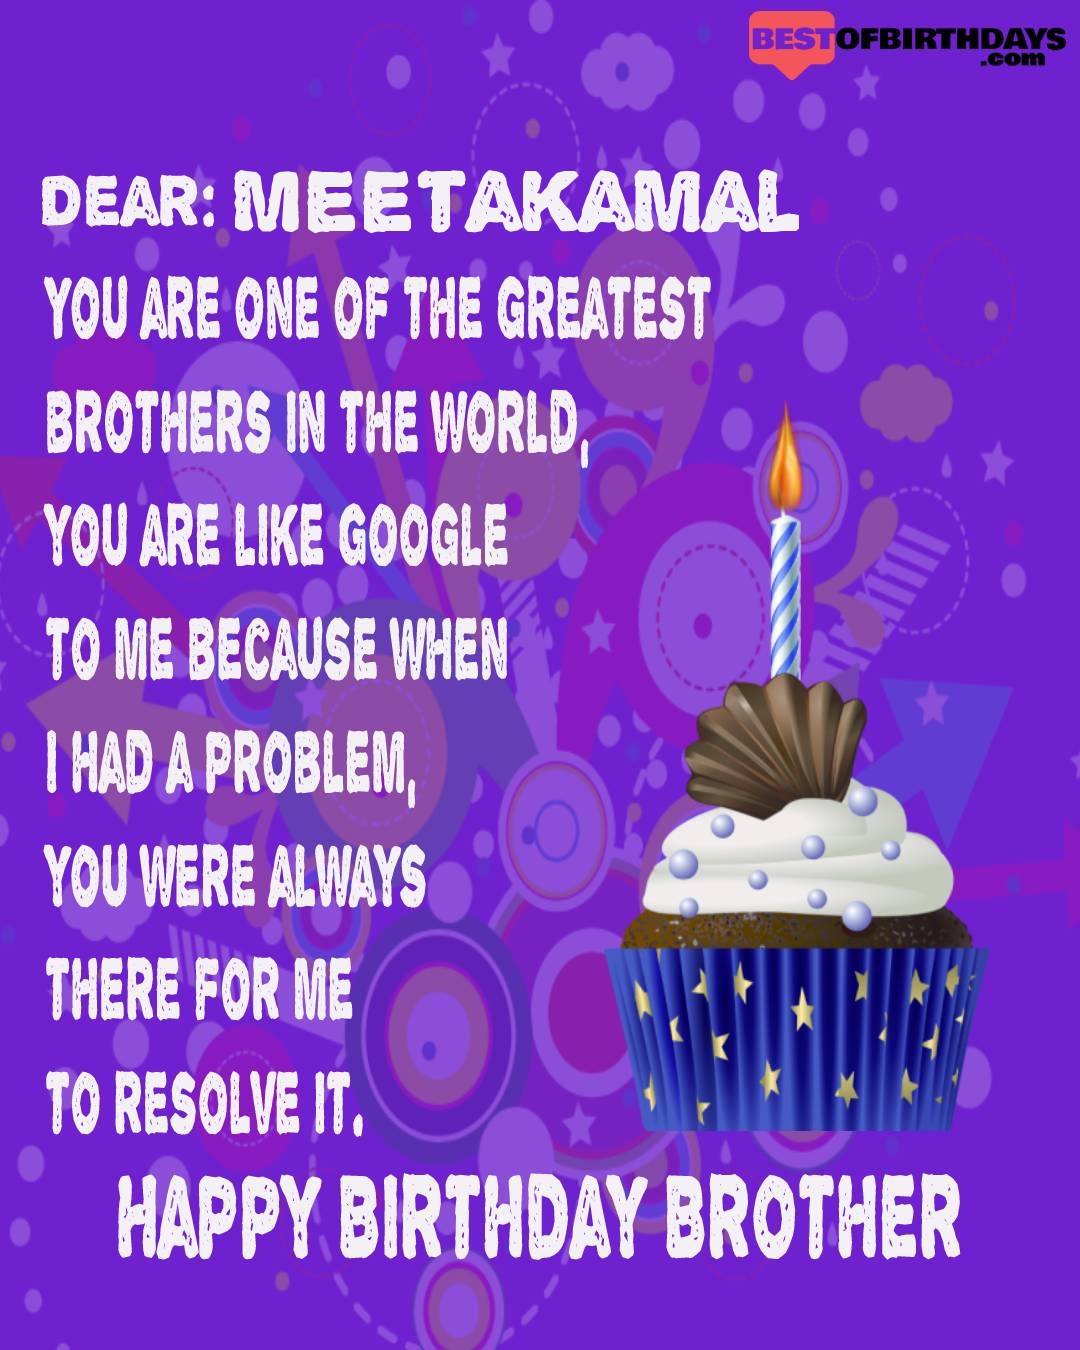 Happy birthday meetakamal bhai brother bro